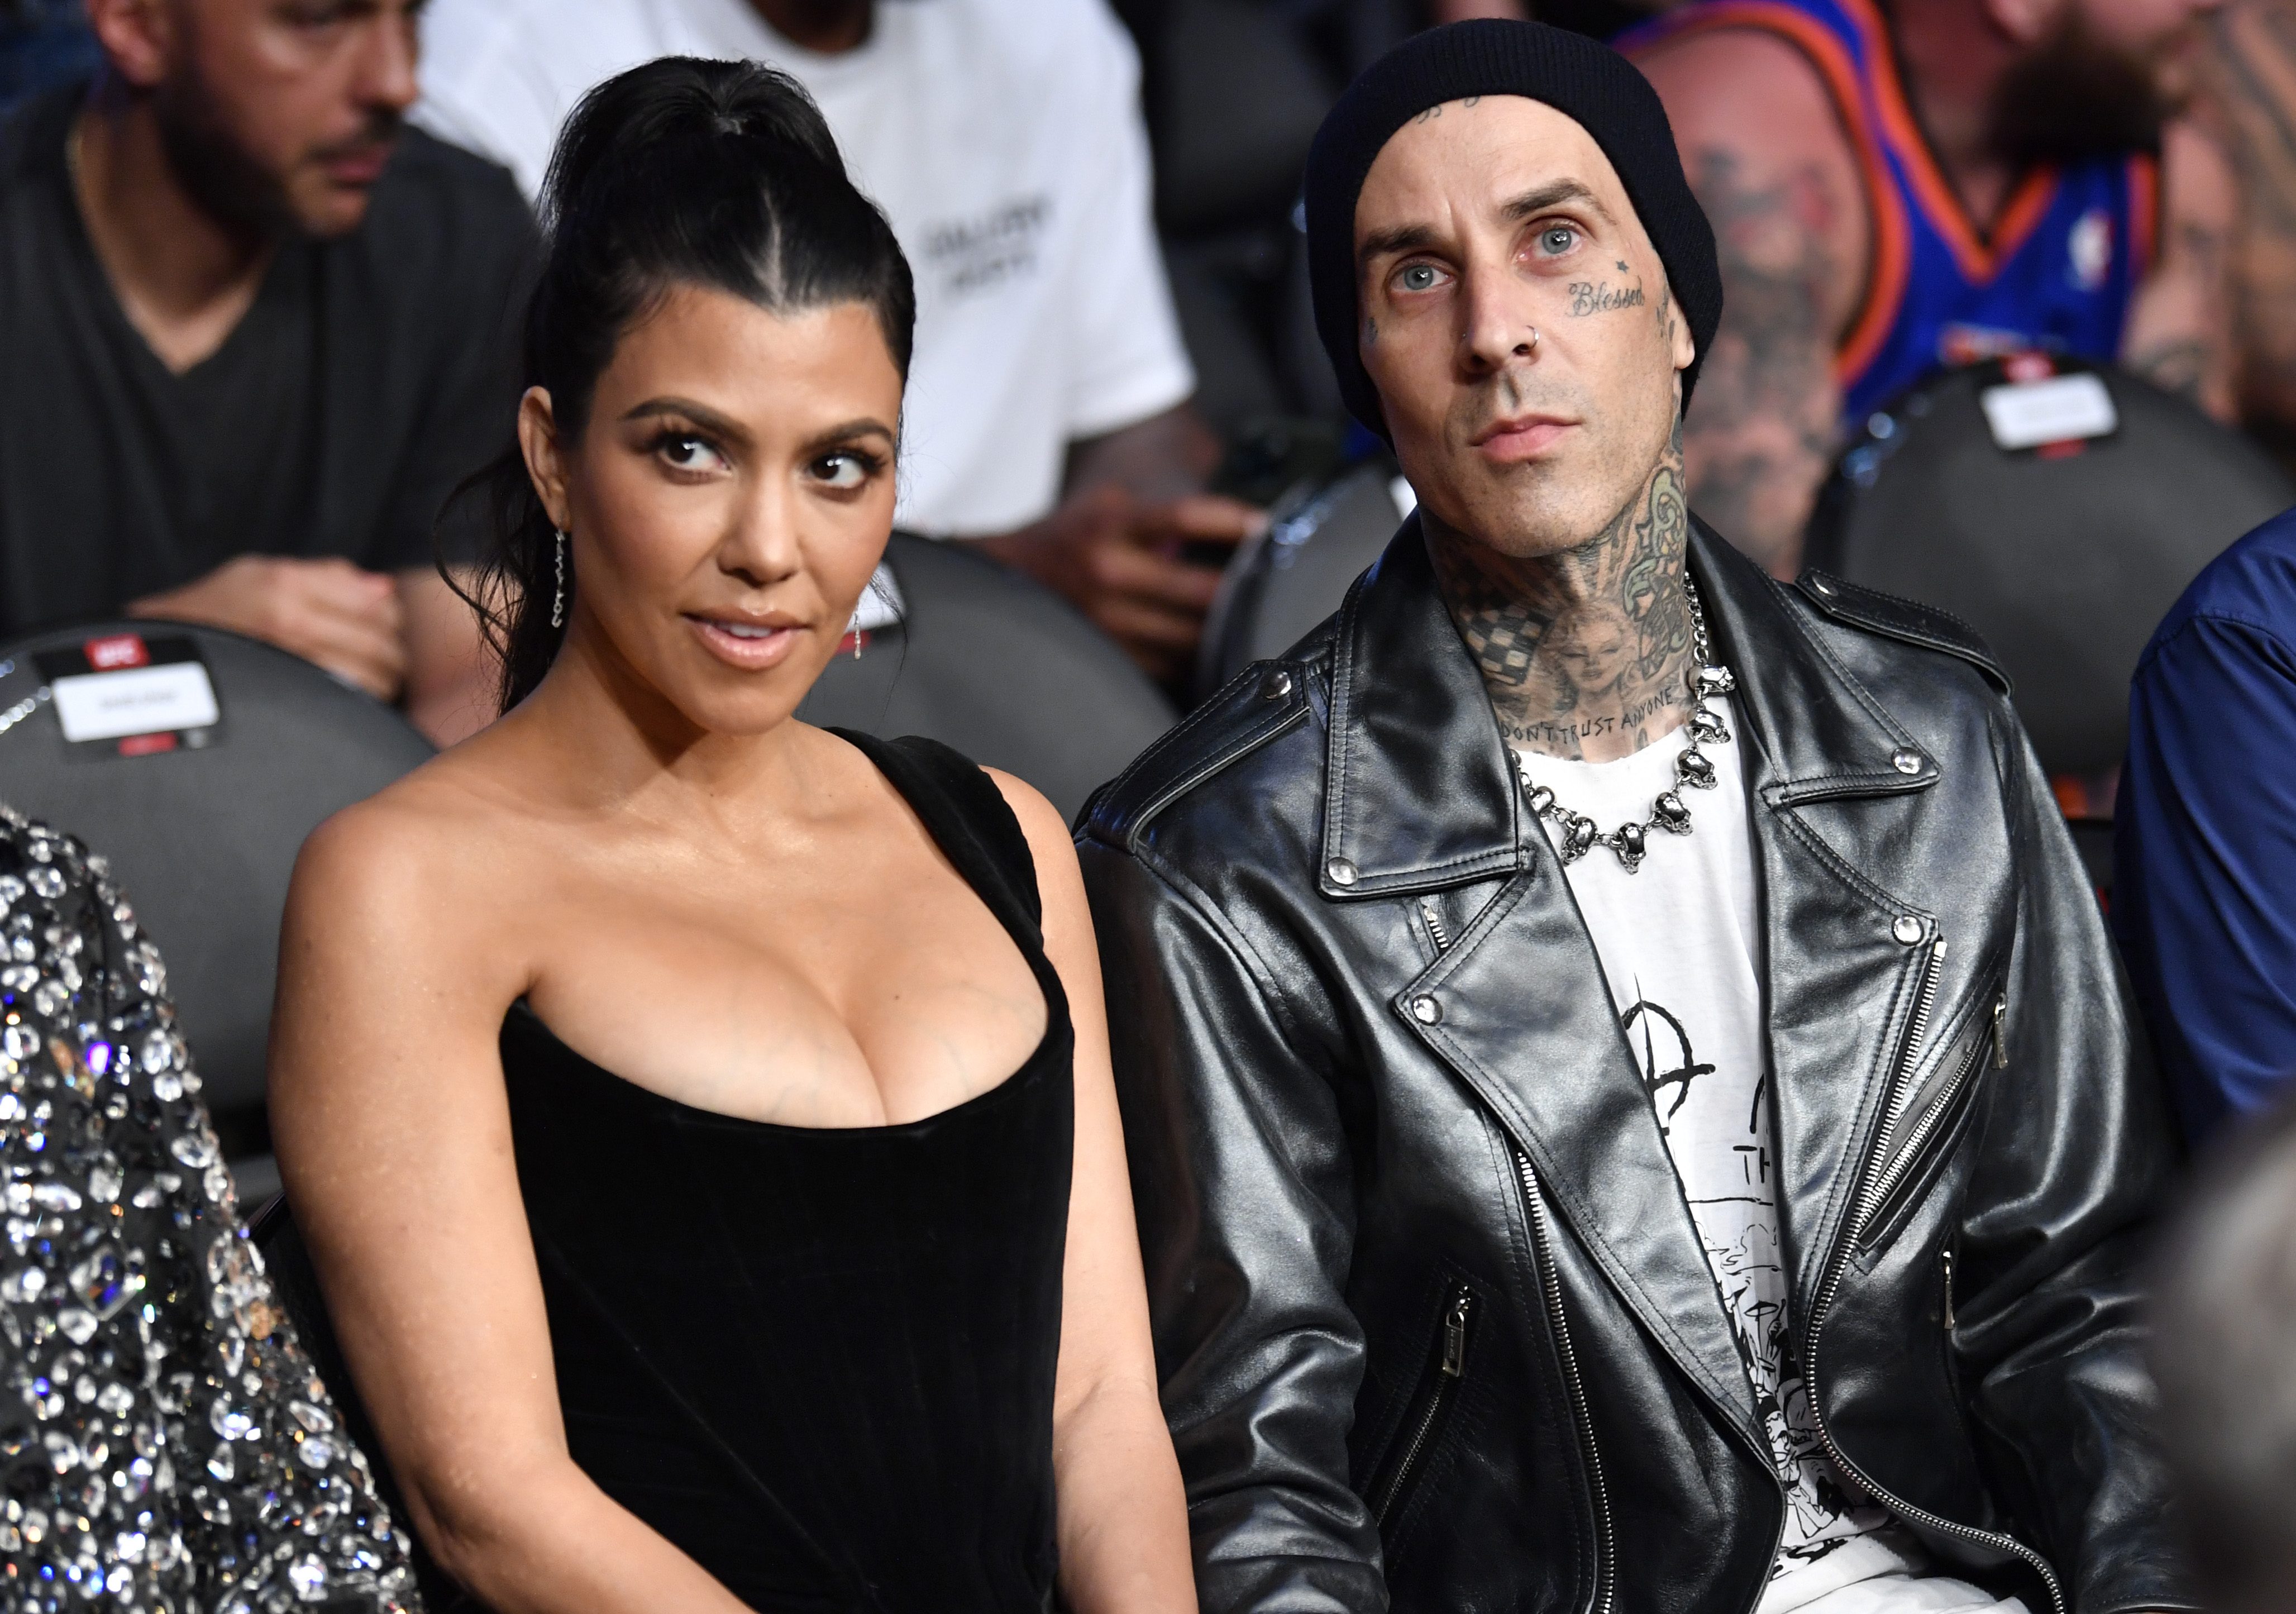 Kourtney Kardashian and Travis Barker sit side by side attending an event